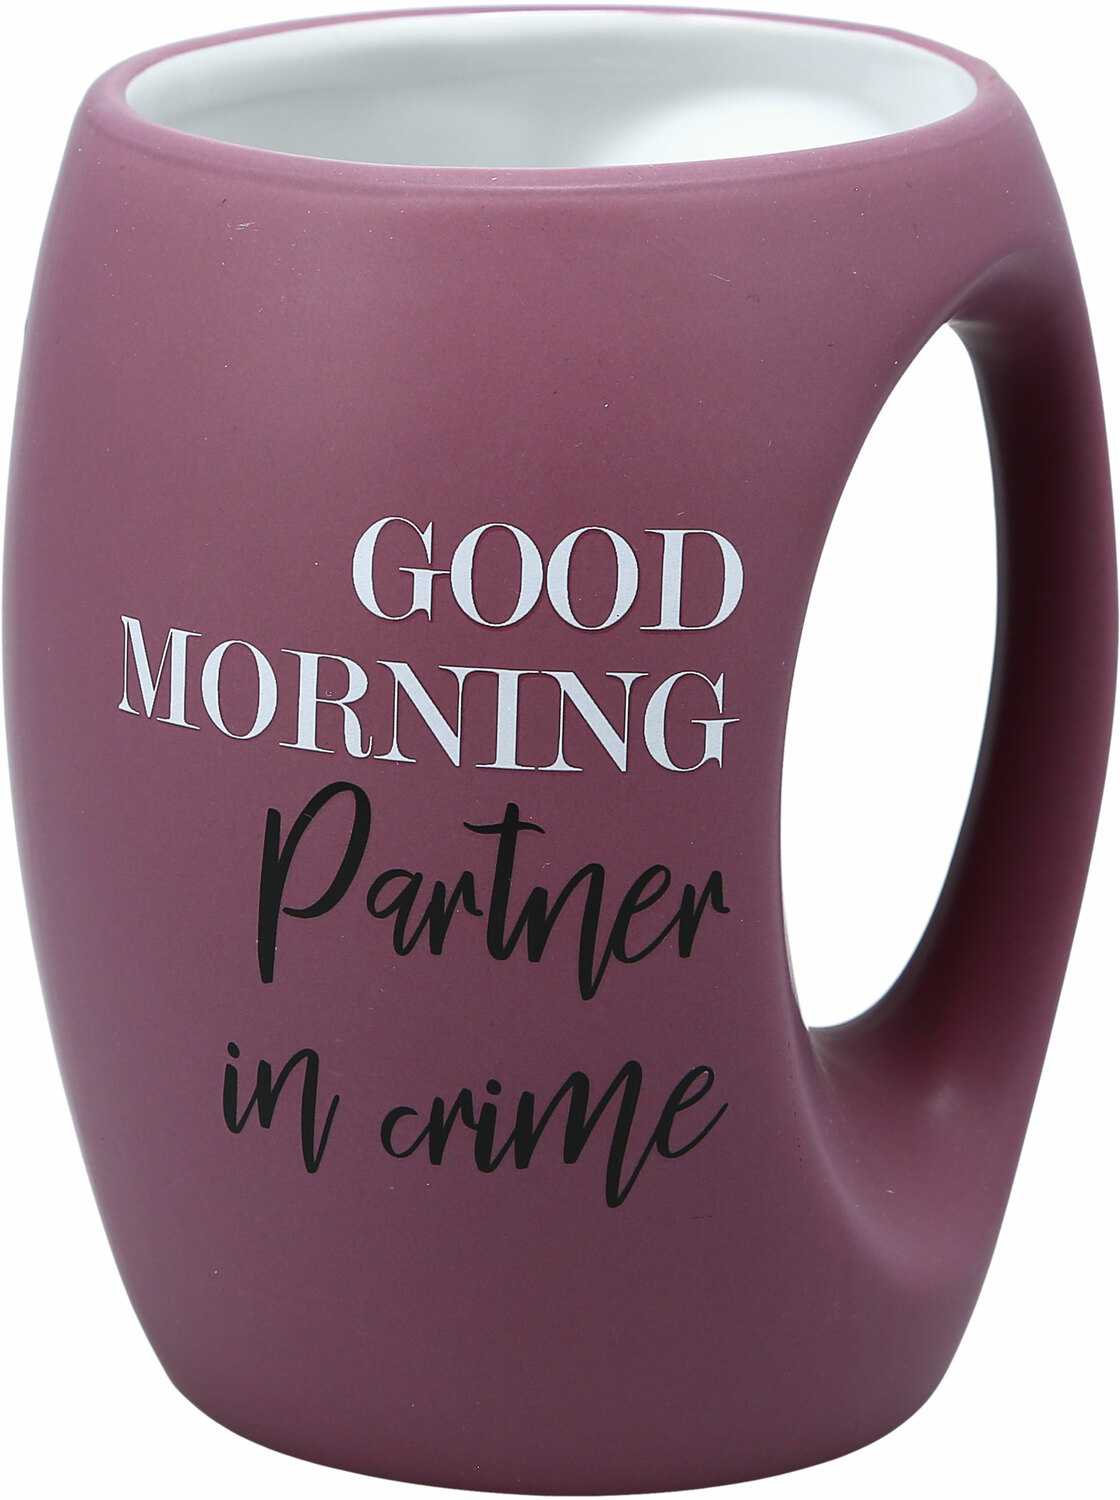 Partner in Crime by Good Morning - Partner in Crime - 16 oz Mug